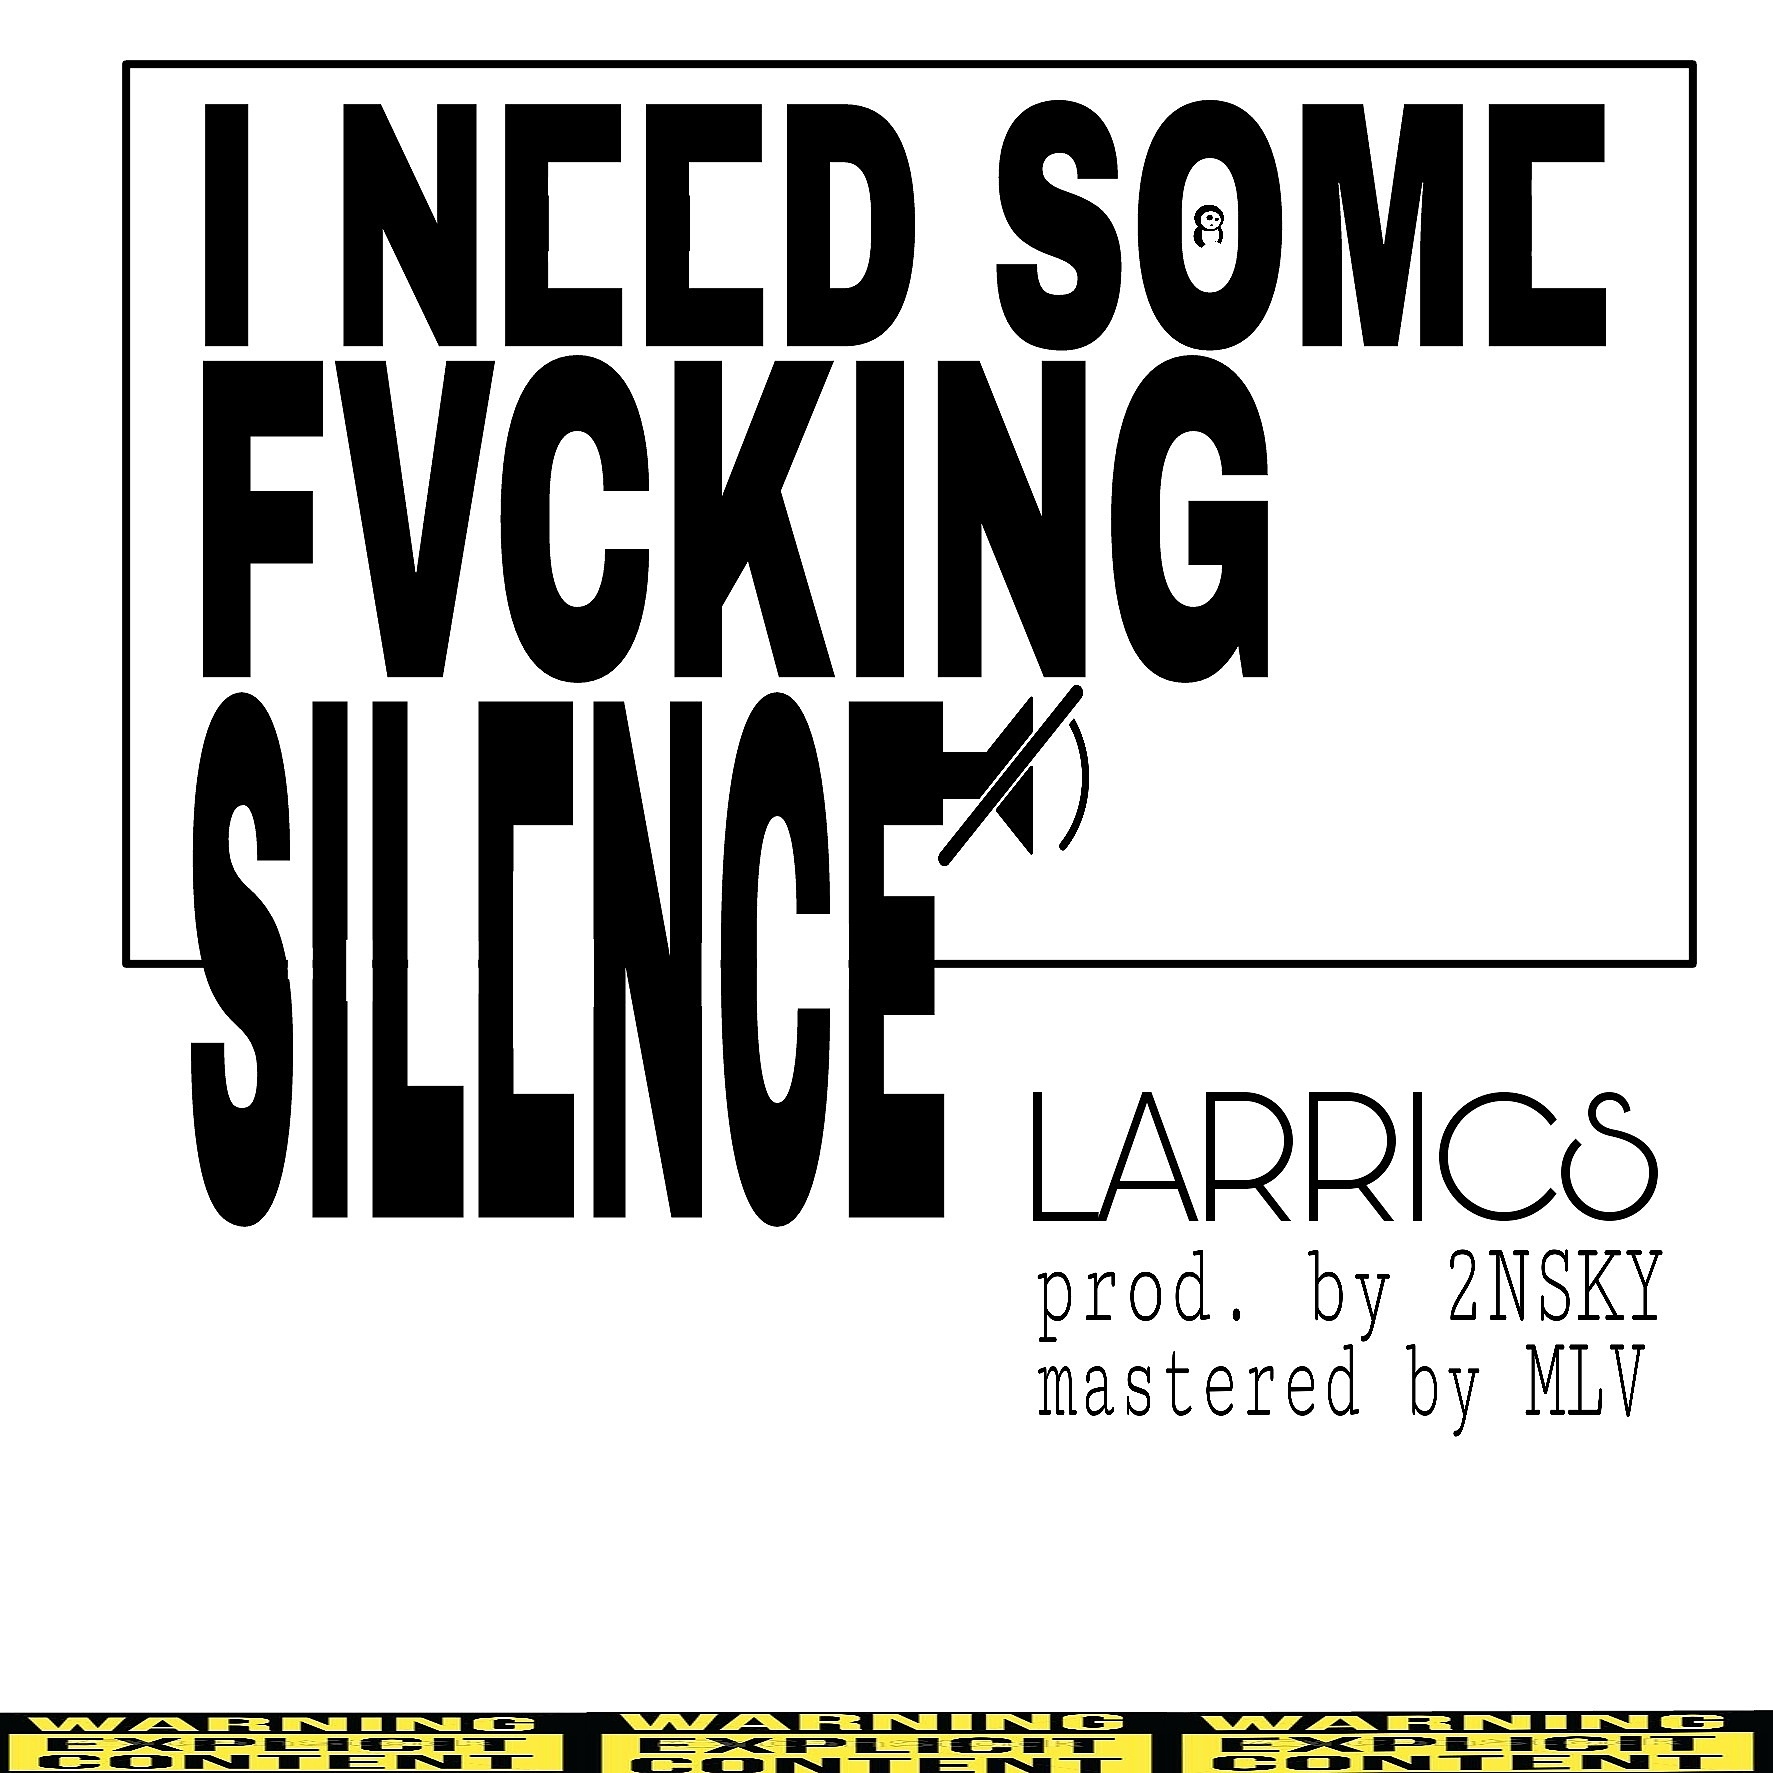 Music : Larrics – I Need Some Fvckin’ Silence